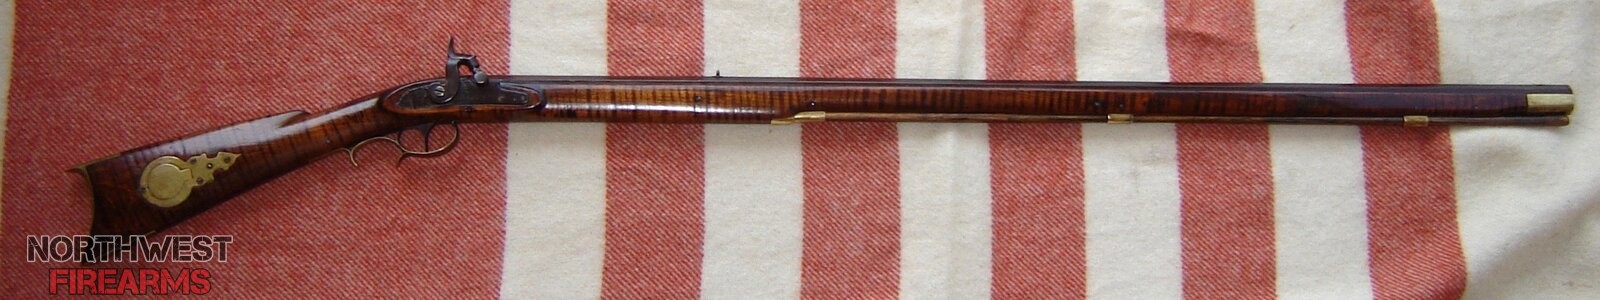 Henry Leman Trade Rifle circa 1840's -1870's